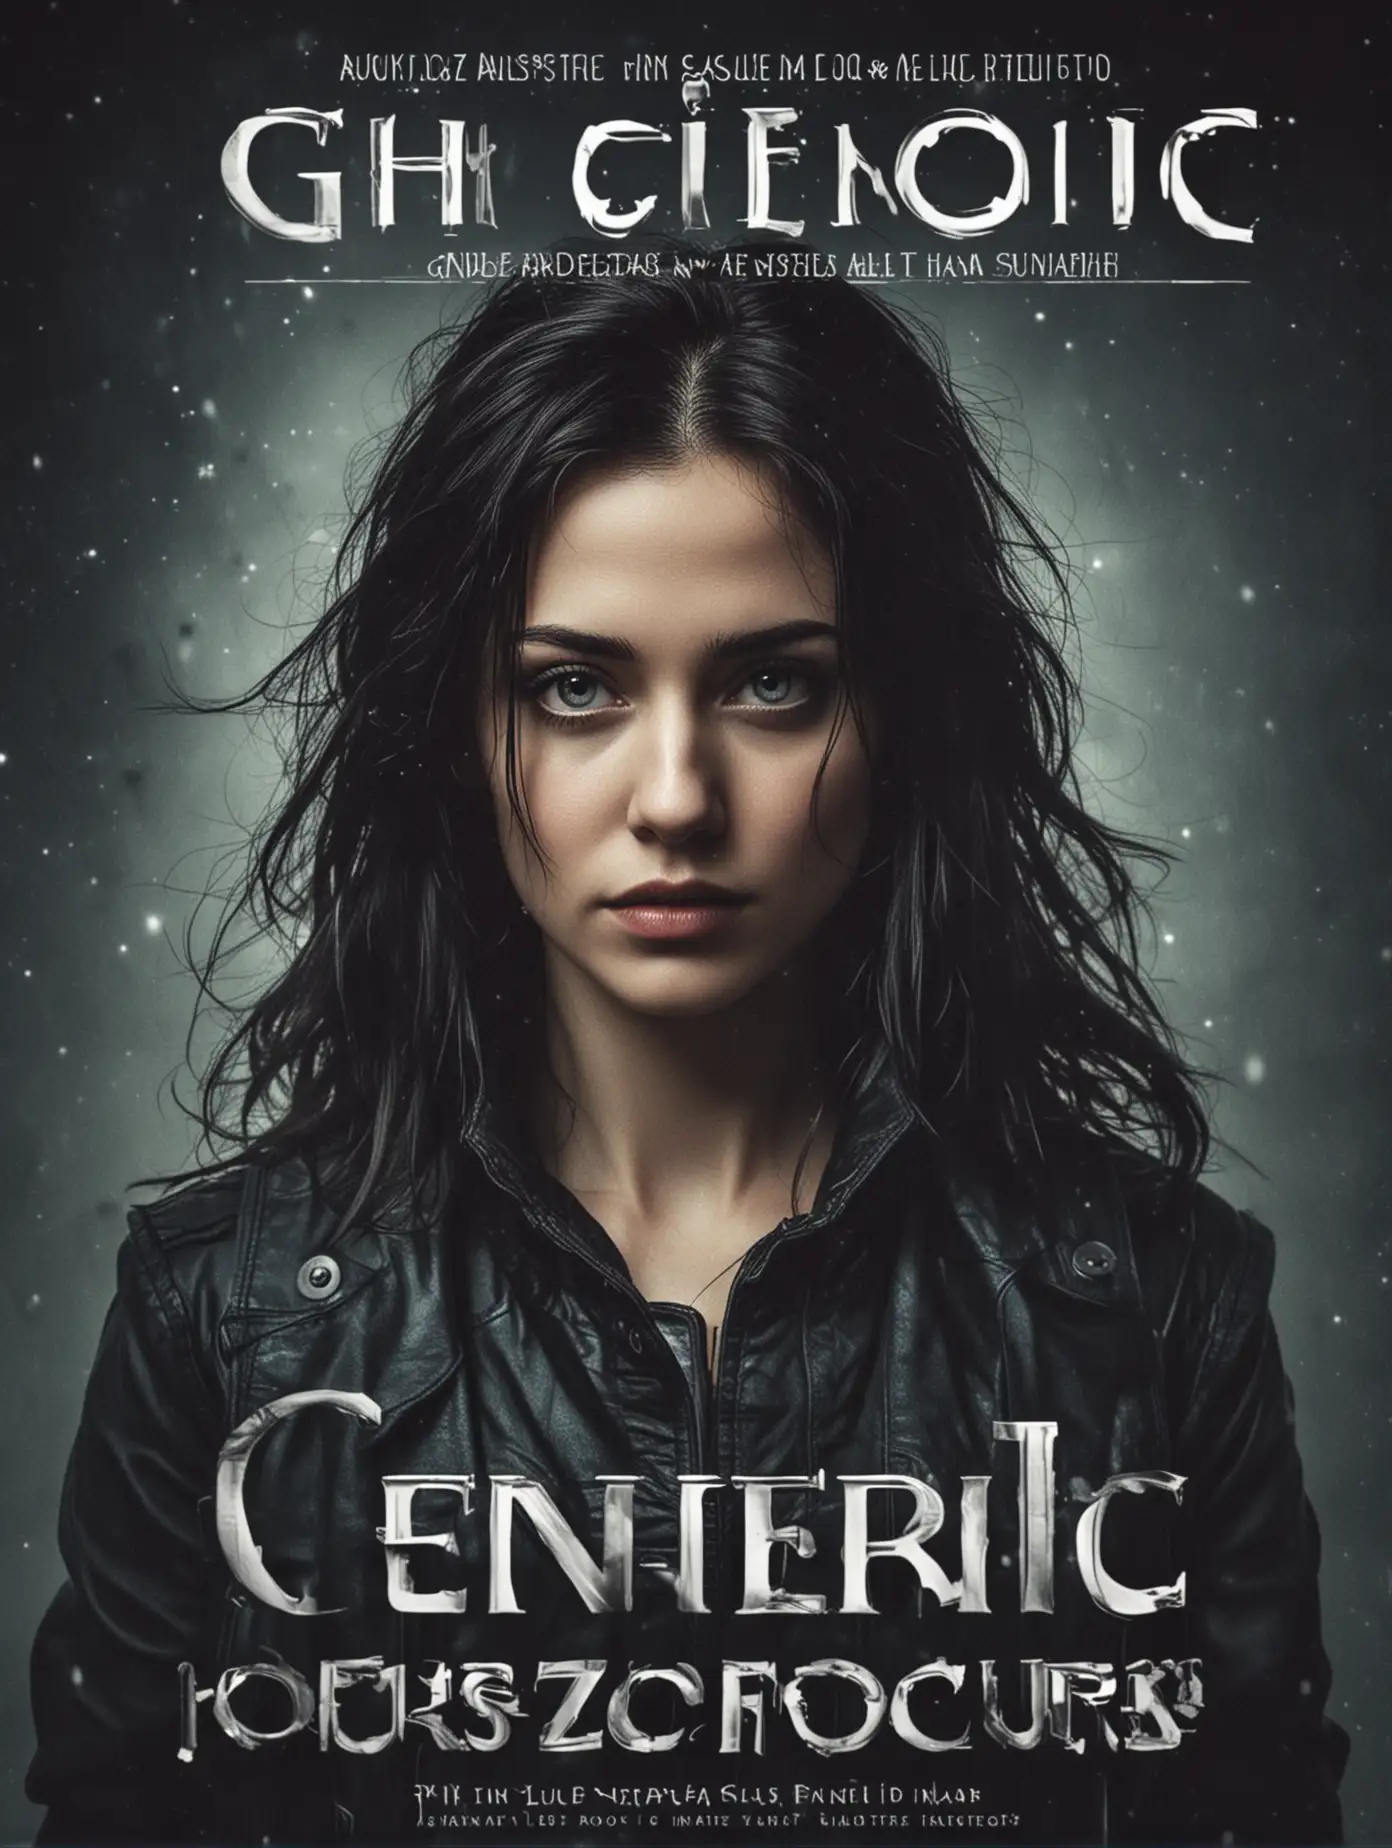 generic ebook cover art

